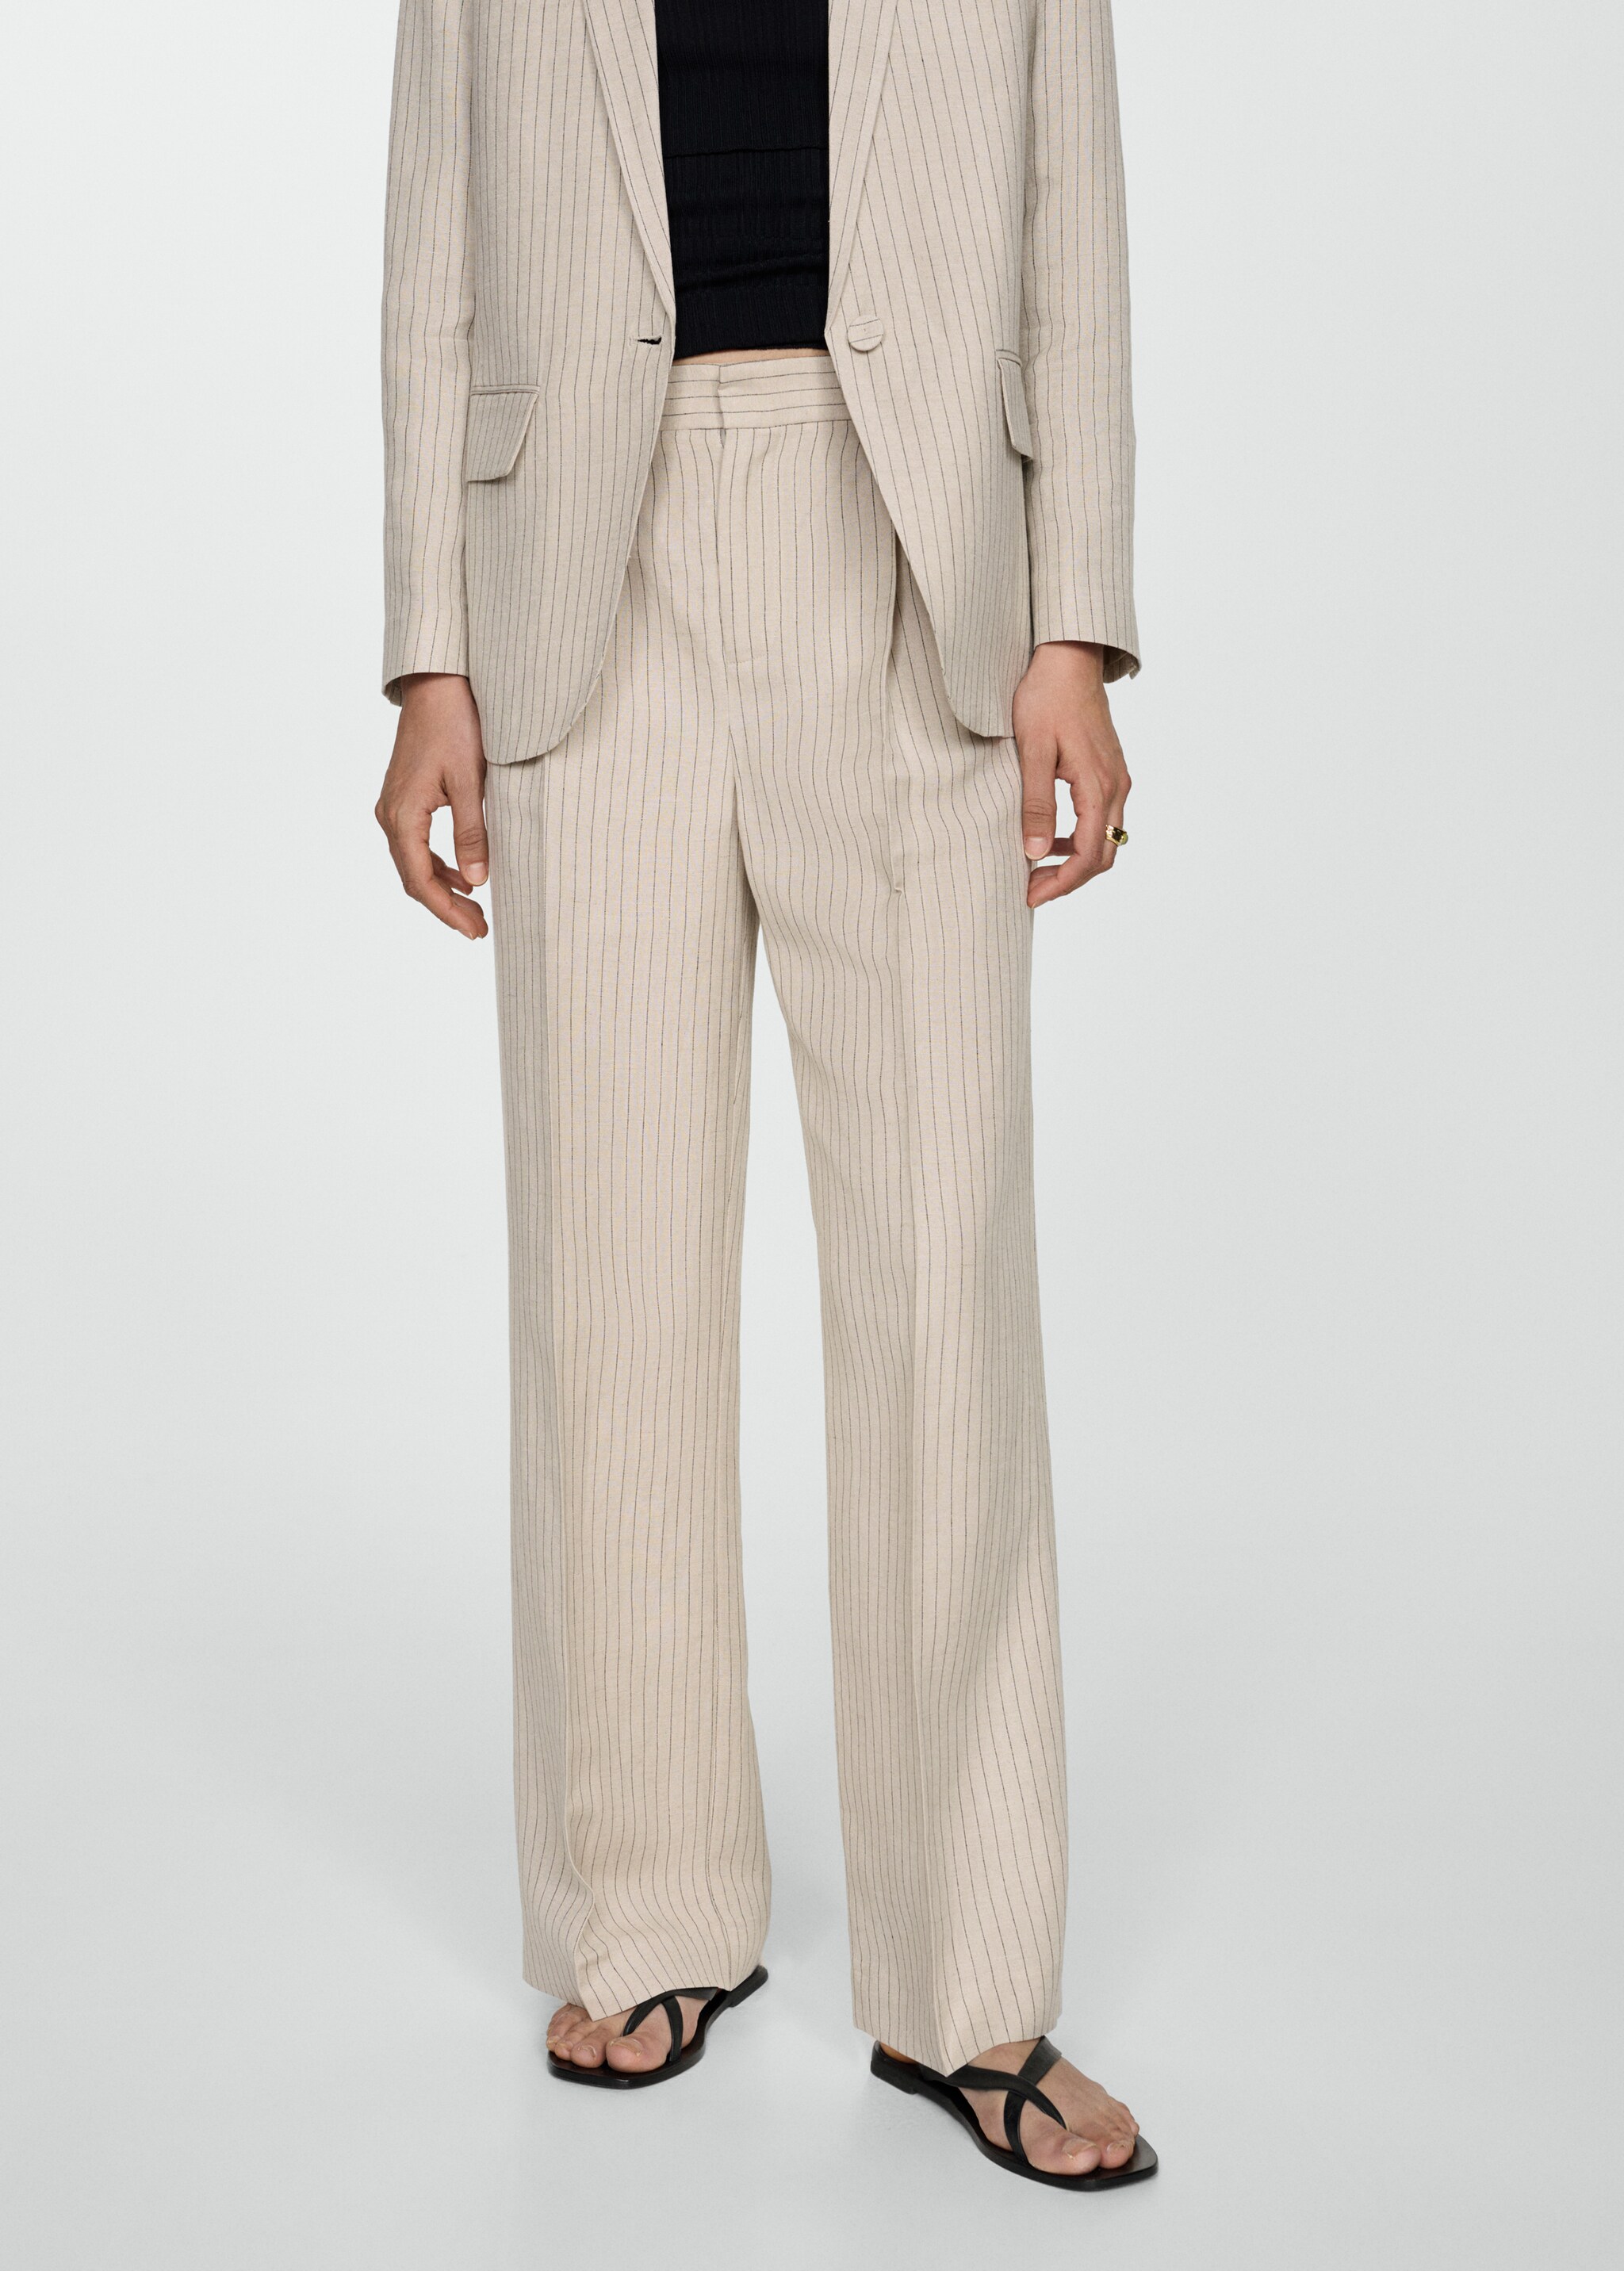 Striped suit trousers - Medium plane